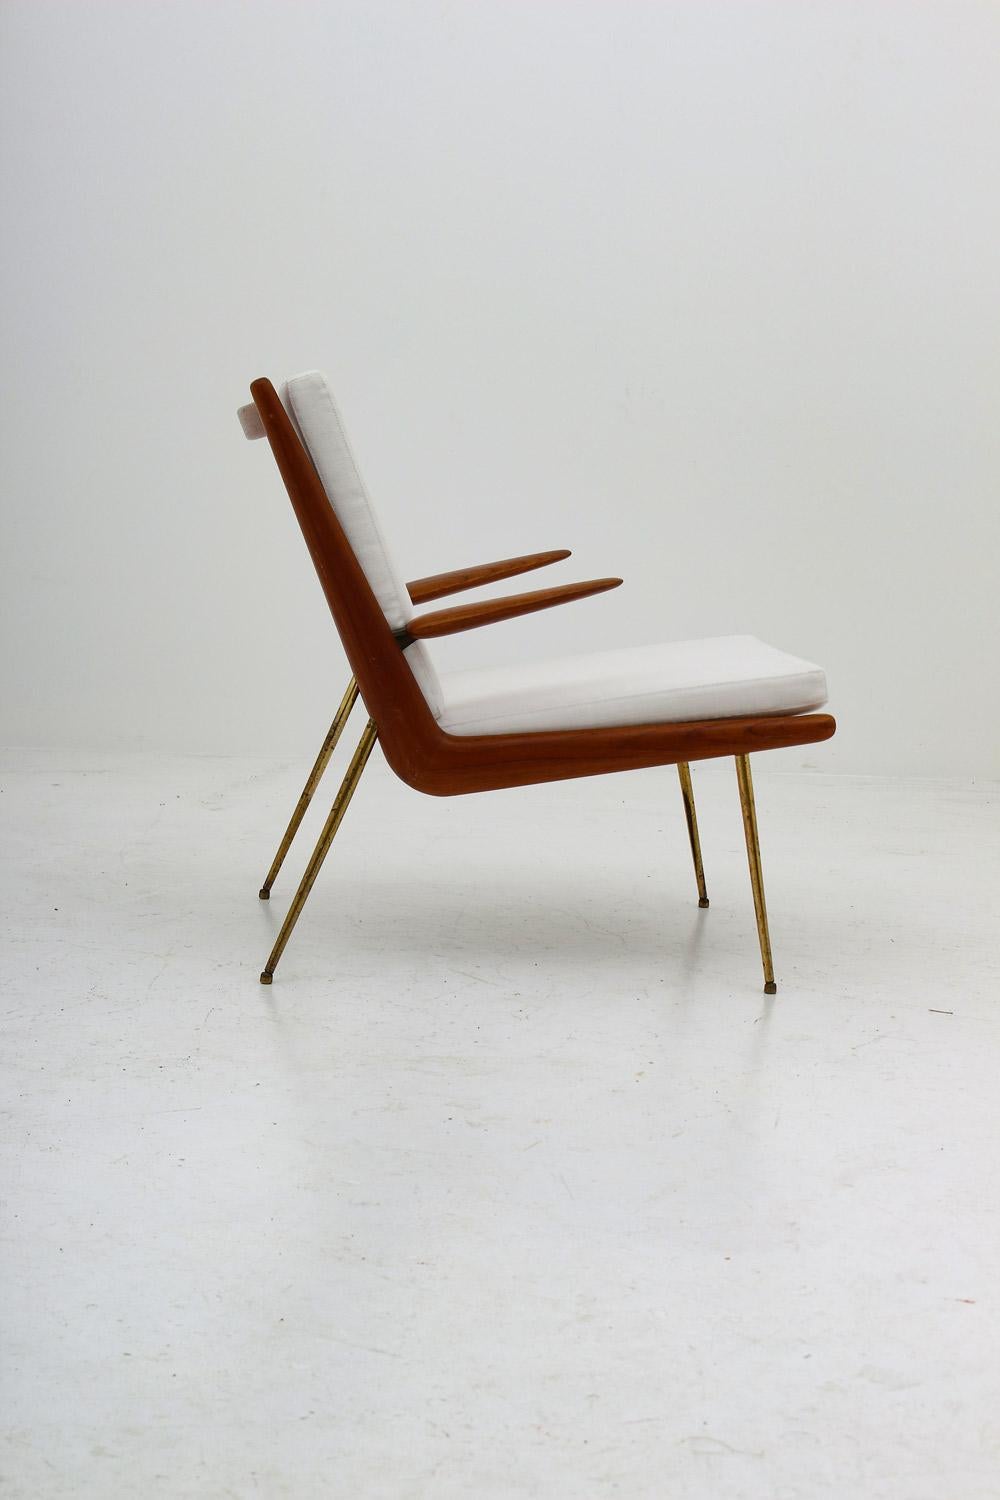 Swedish Scandinavian Lounge Chair FD135 by Peter Hvidt & Orla Mølgaard-Nielsen